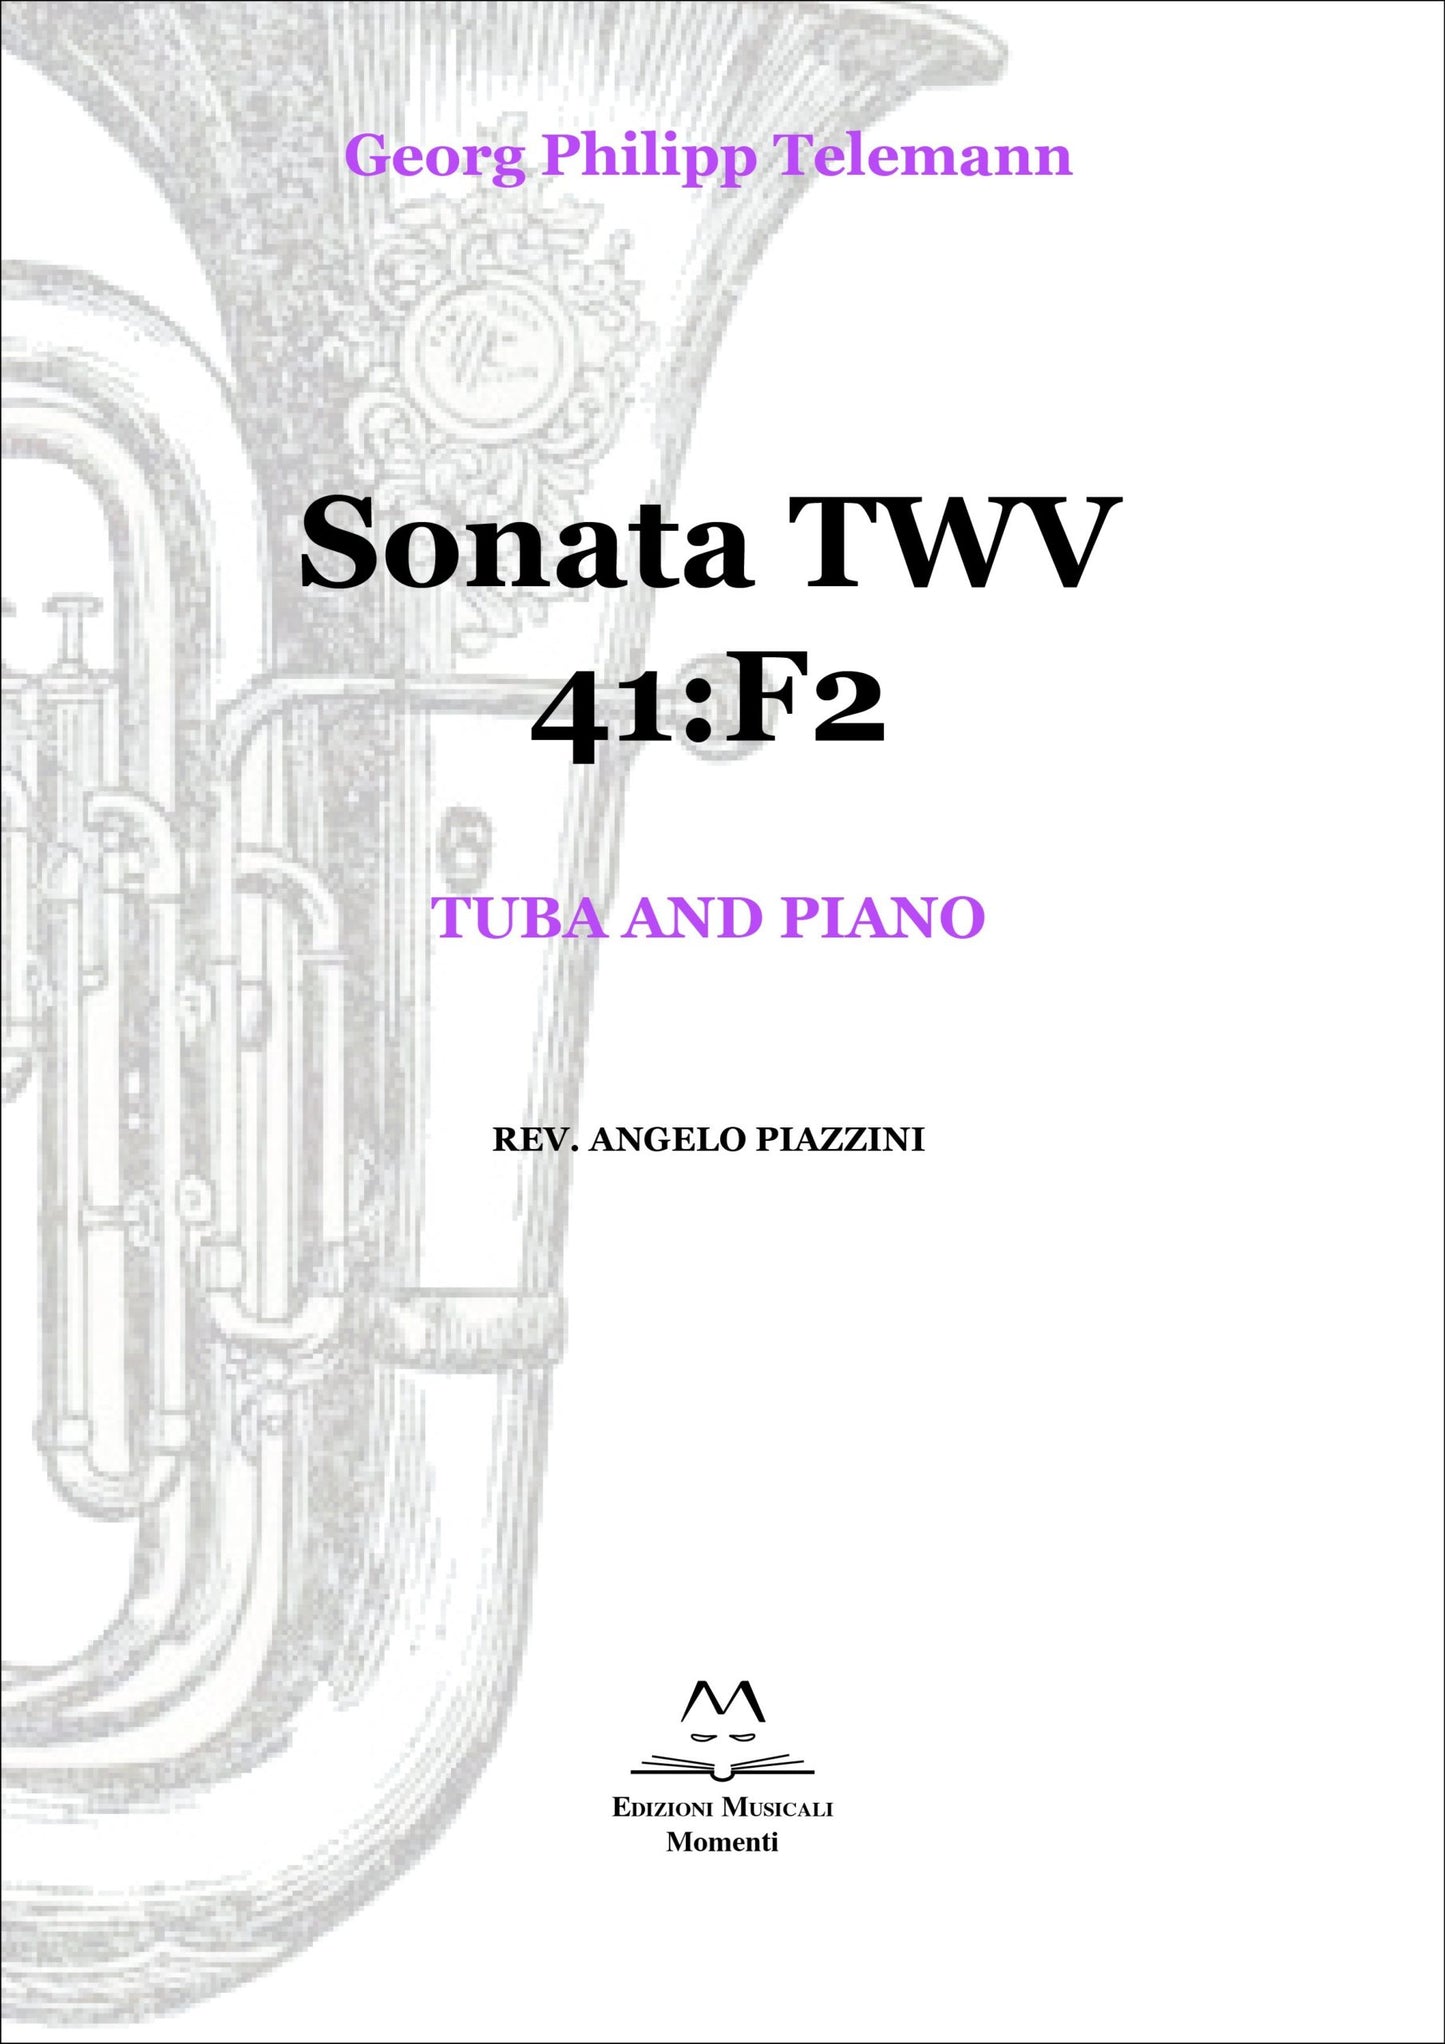 Sonata TWV 41:F2 - Tuba and piano rev. Angelo Piazzini